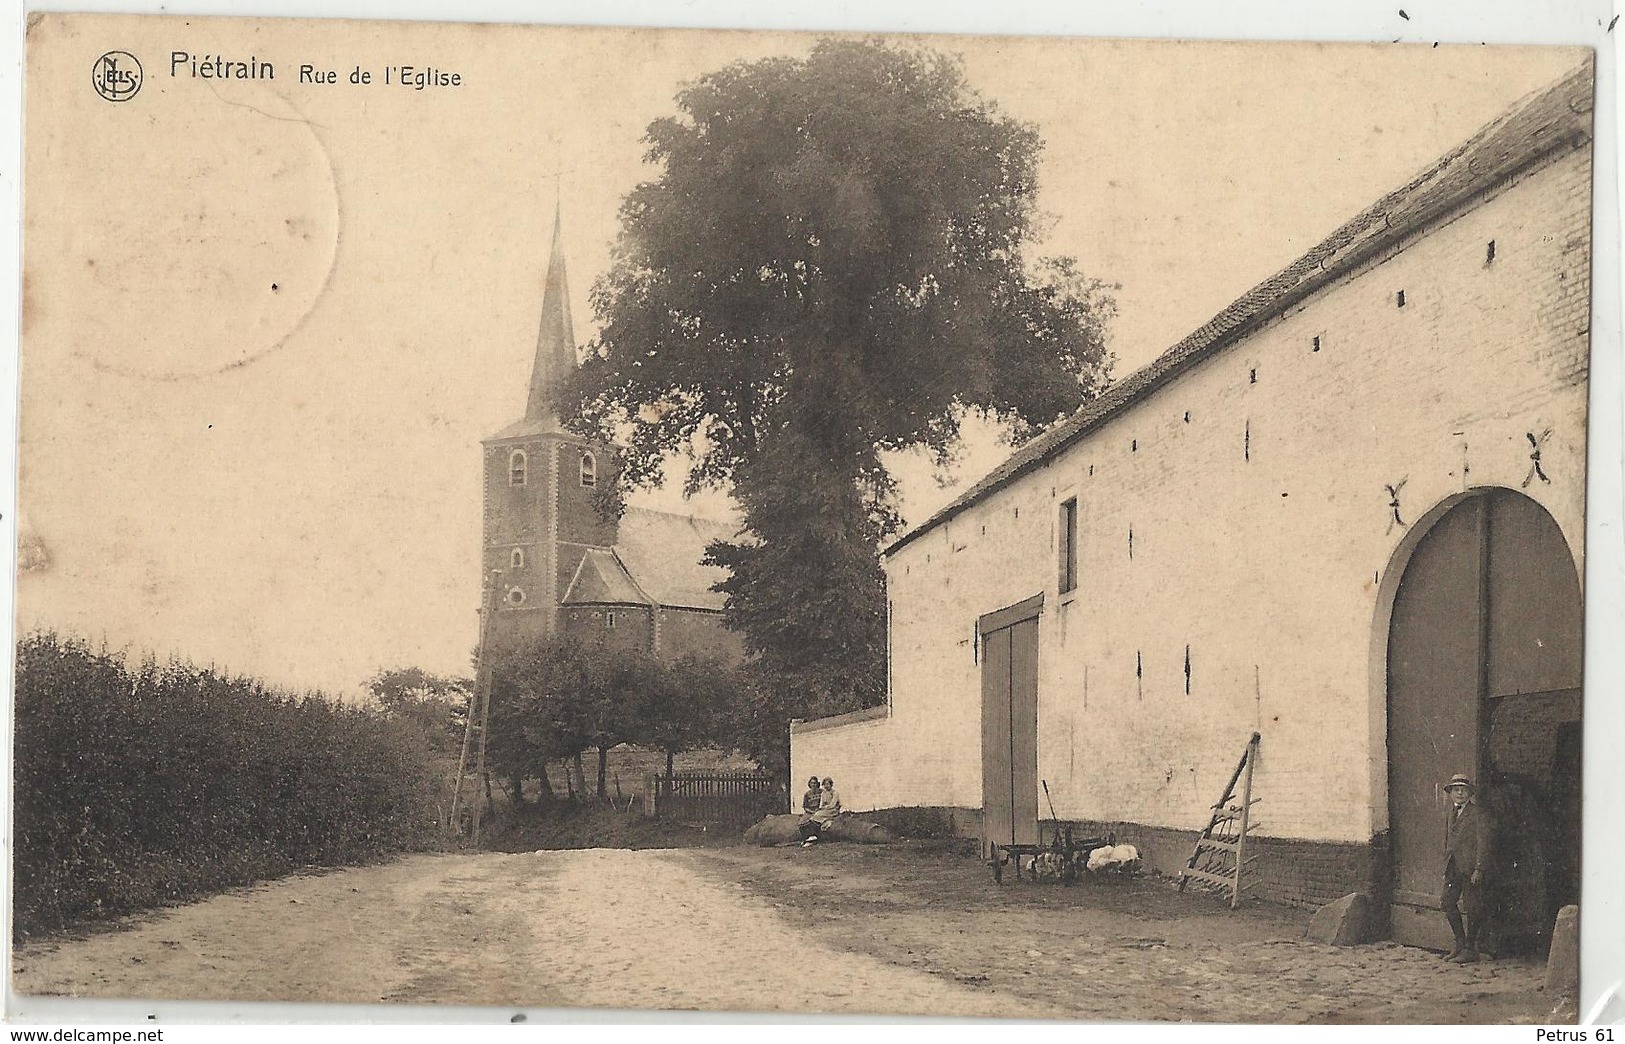 PIETRAIN - Rue De L'Eglise - 1926 (Jodoigne) - Geldenaken